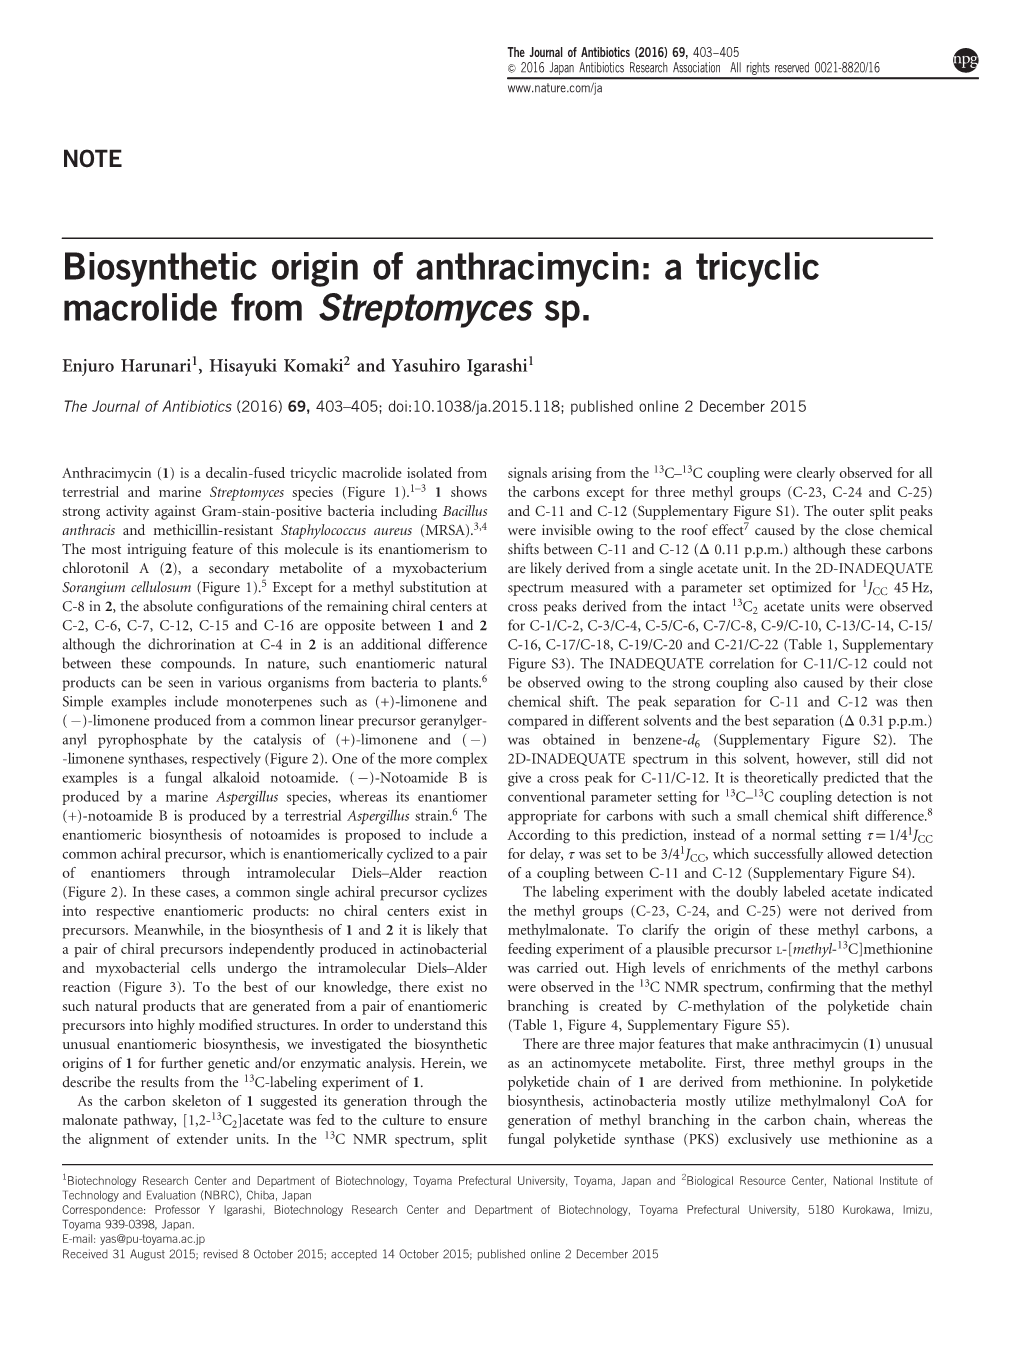 Biosynthetic Origin of Anthracimycin: a Tricyclic Macrolide from Streptomyces Sp